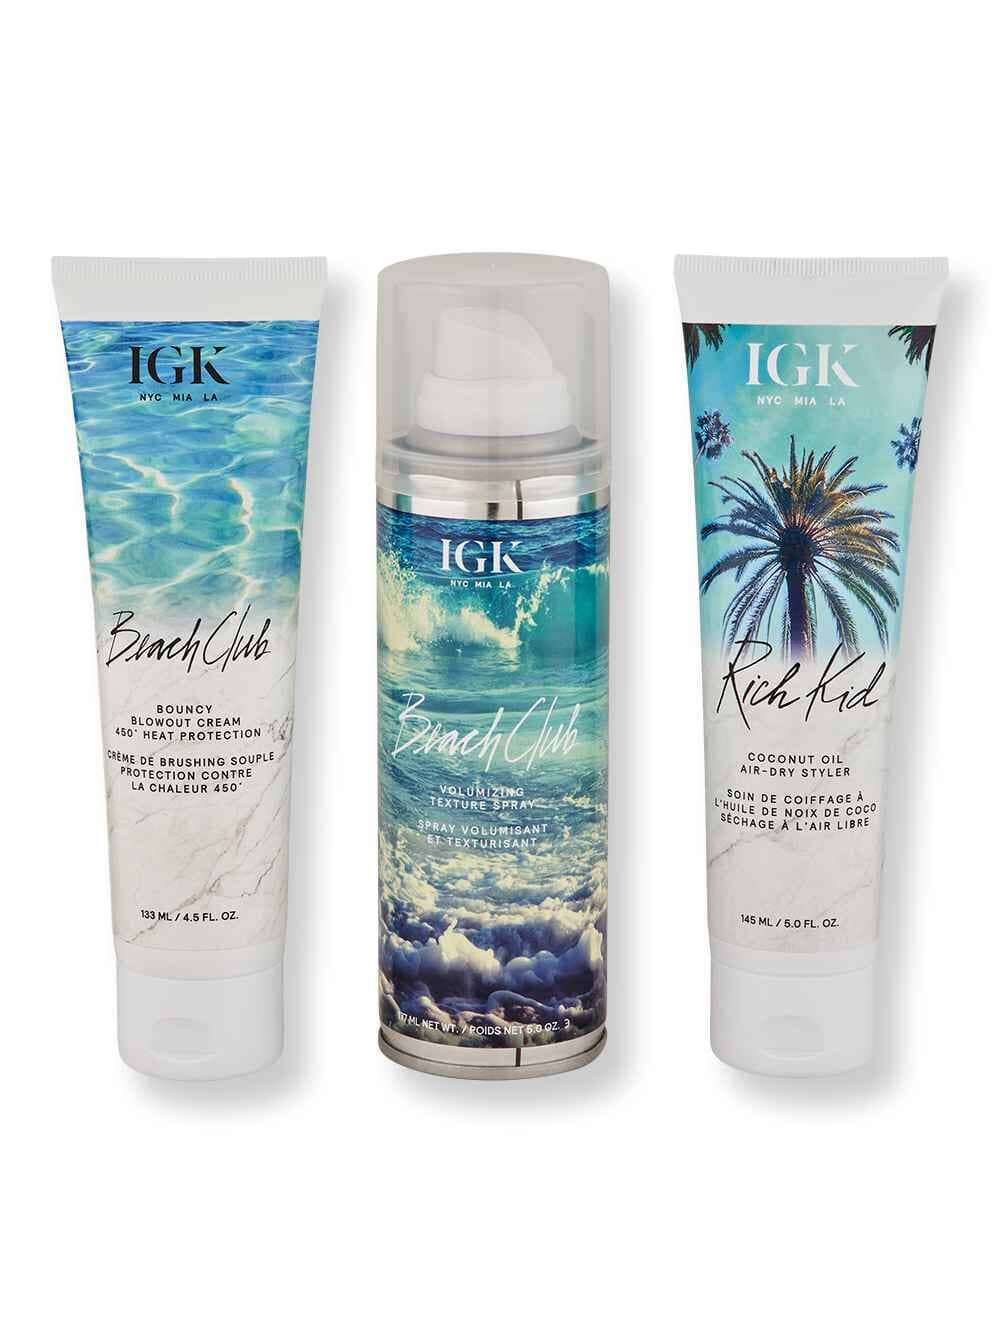 iGK iGK Beach Club Bouncy Blowout Cream 4.5 oz, Rich Kid Coconut Oil Air Dry Styler 5 oz, & Beach Club Volumizing Texture Spray 5 oz Hair Care Value Sets 